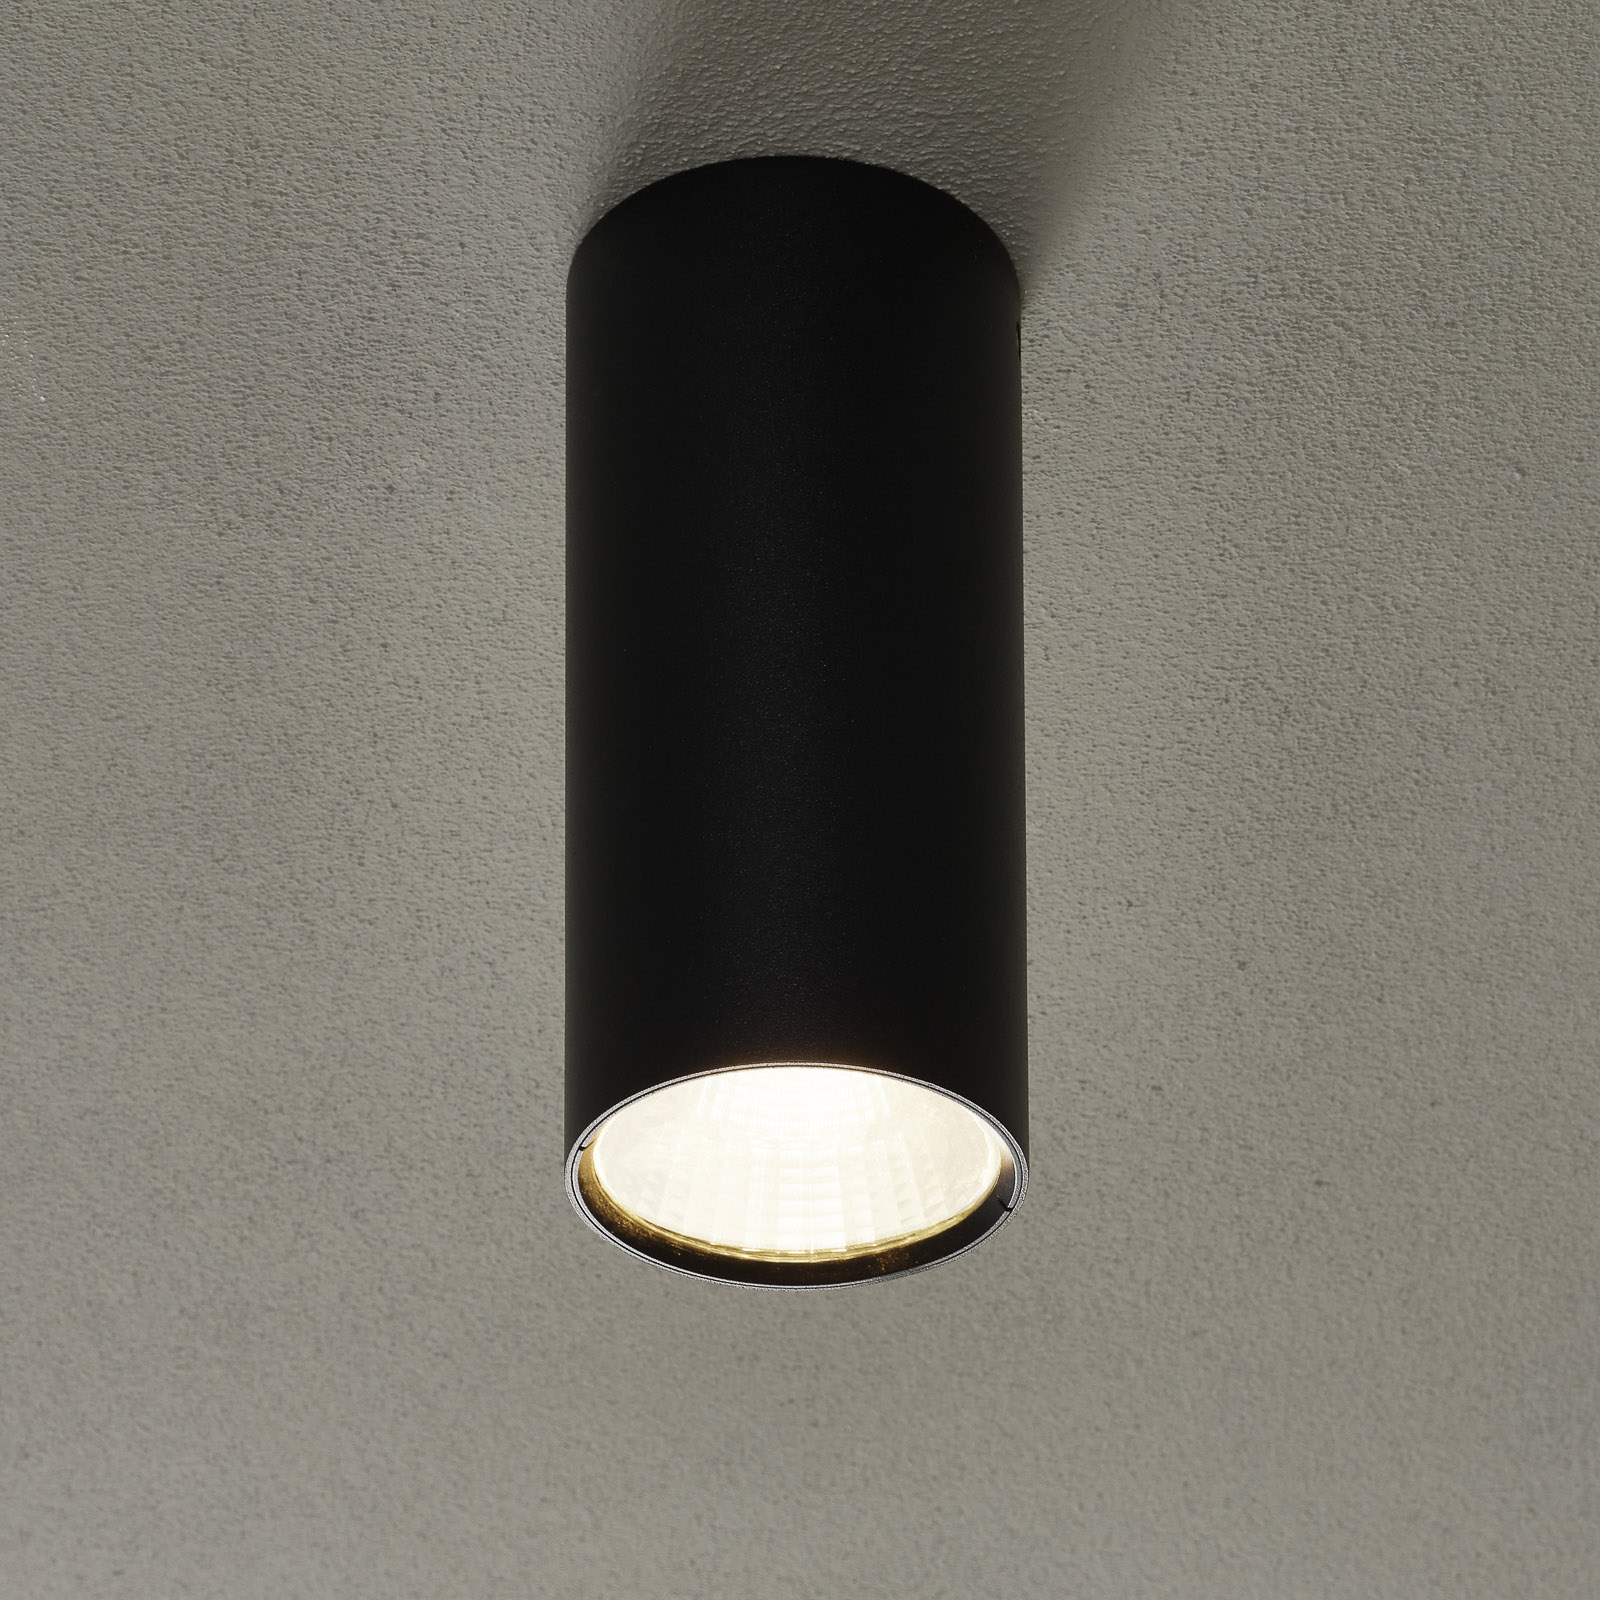 Lucande Takio LED downlight 2700K Ø10cm zwart